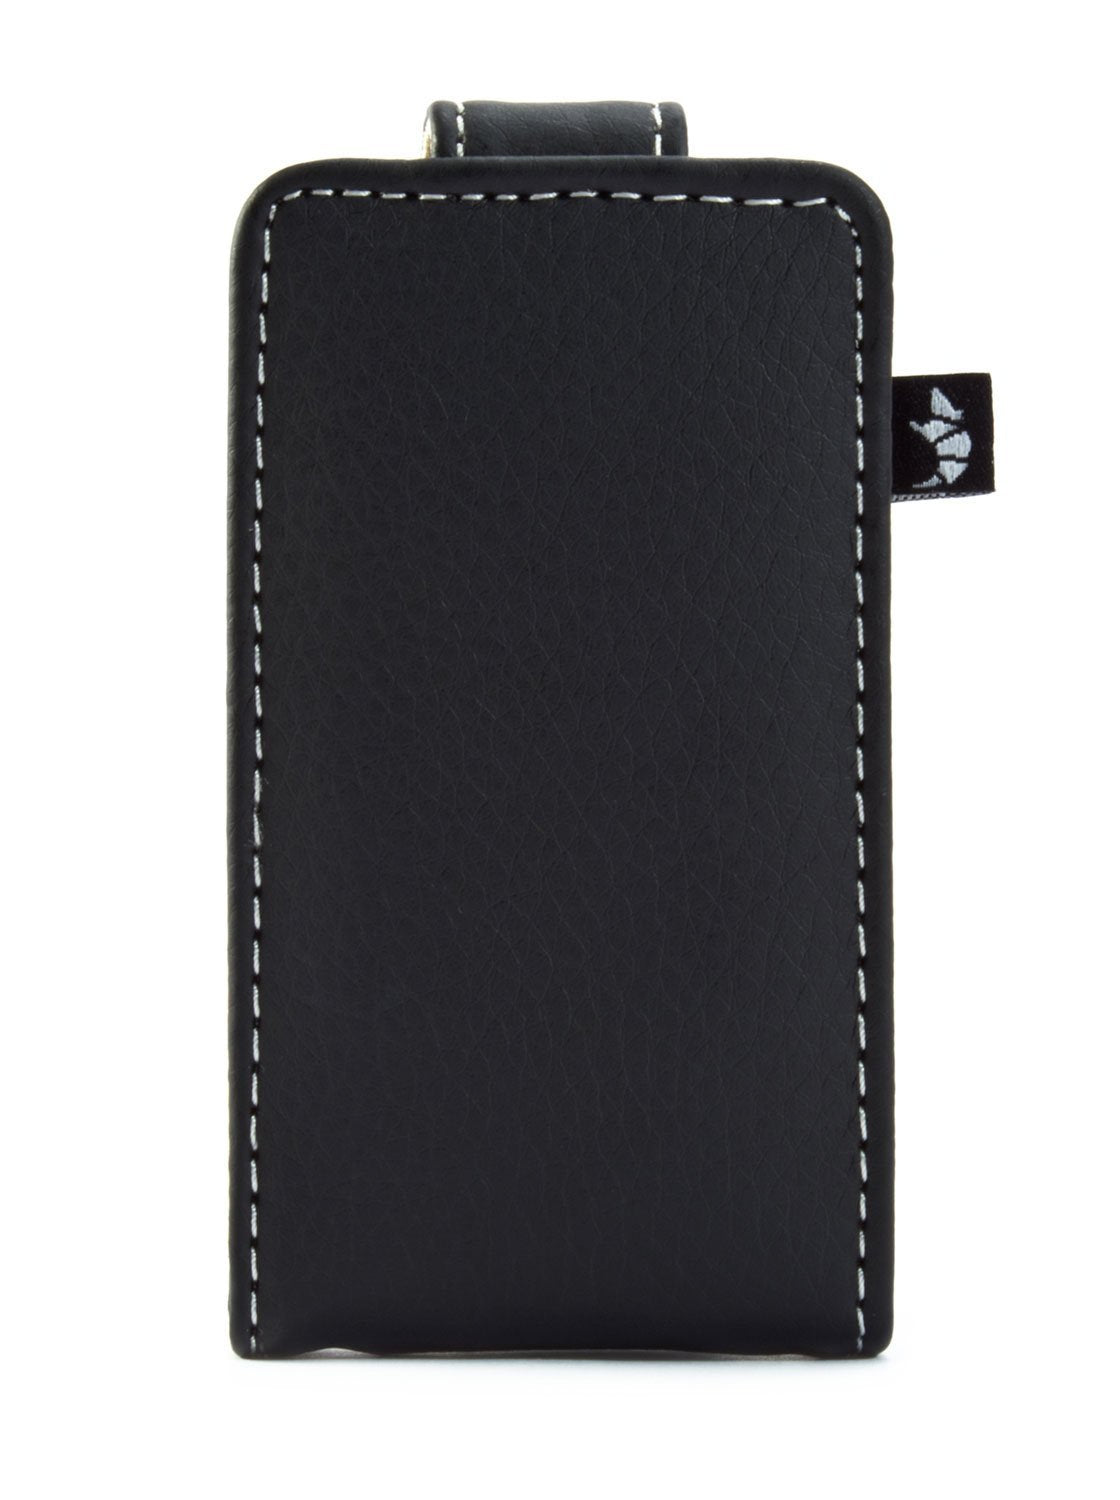 iPod nano 7G Case - Leather Style Black